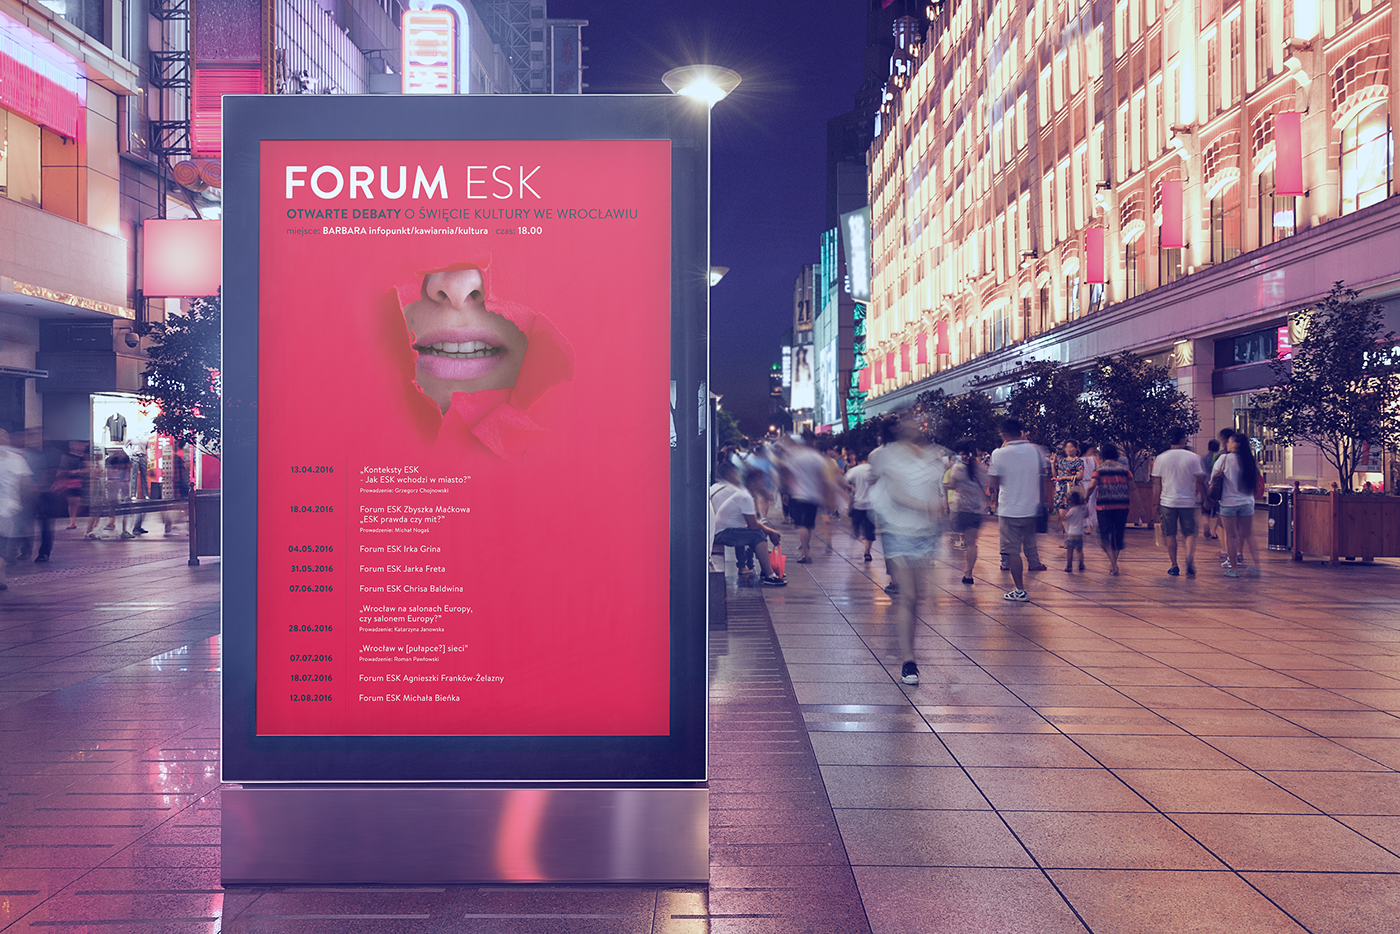 art directon kv Visual Communication poster culture ESK2016